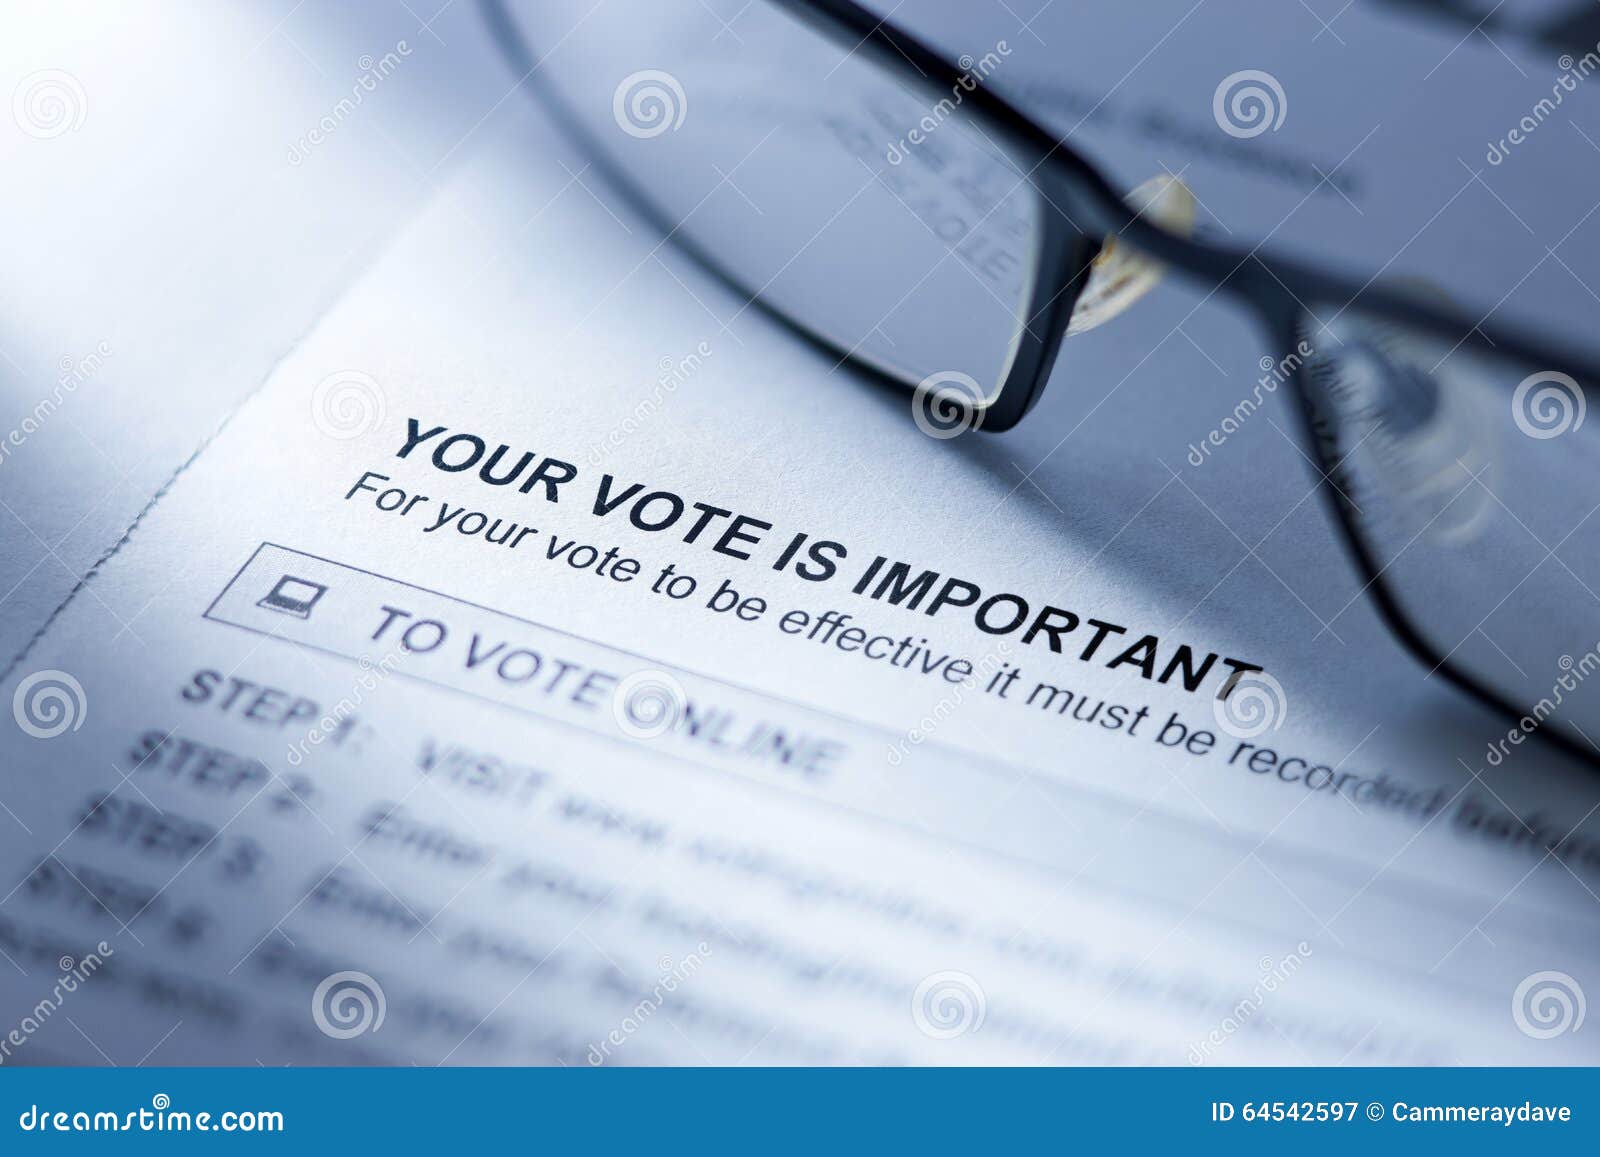 voting vote form business postal 